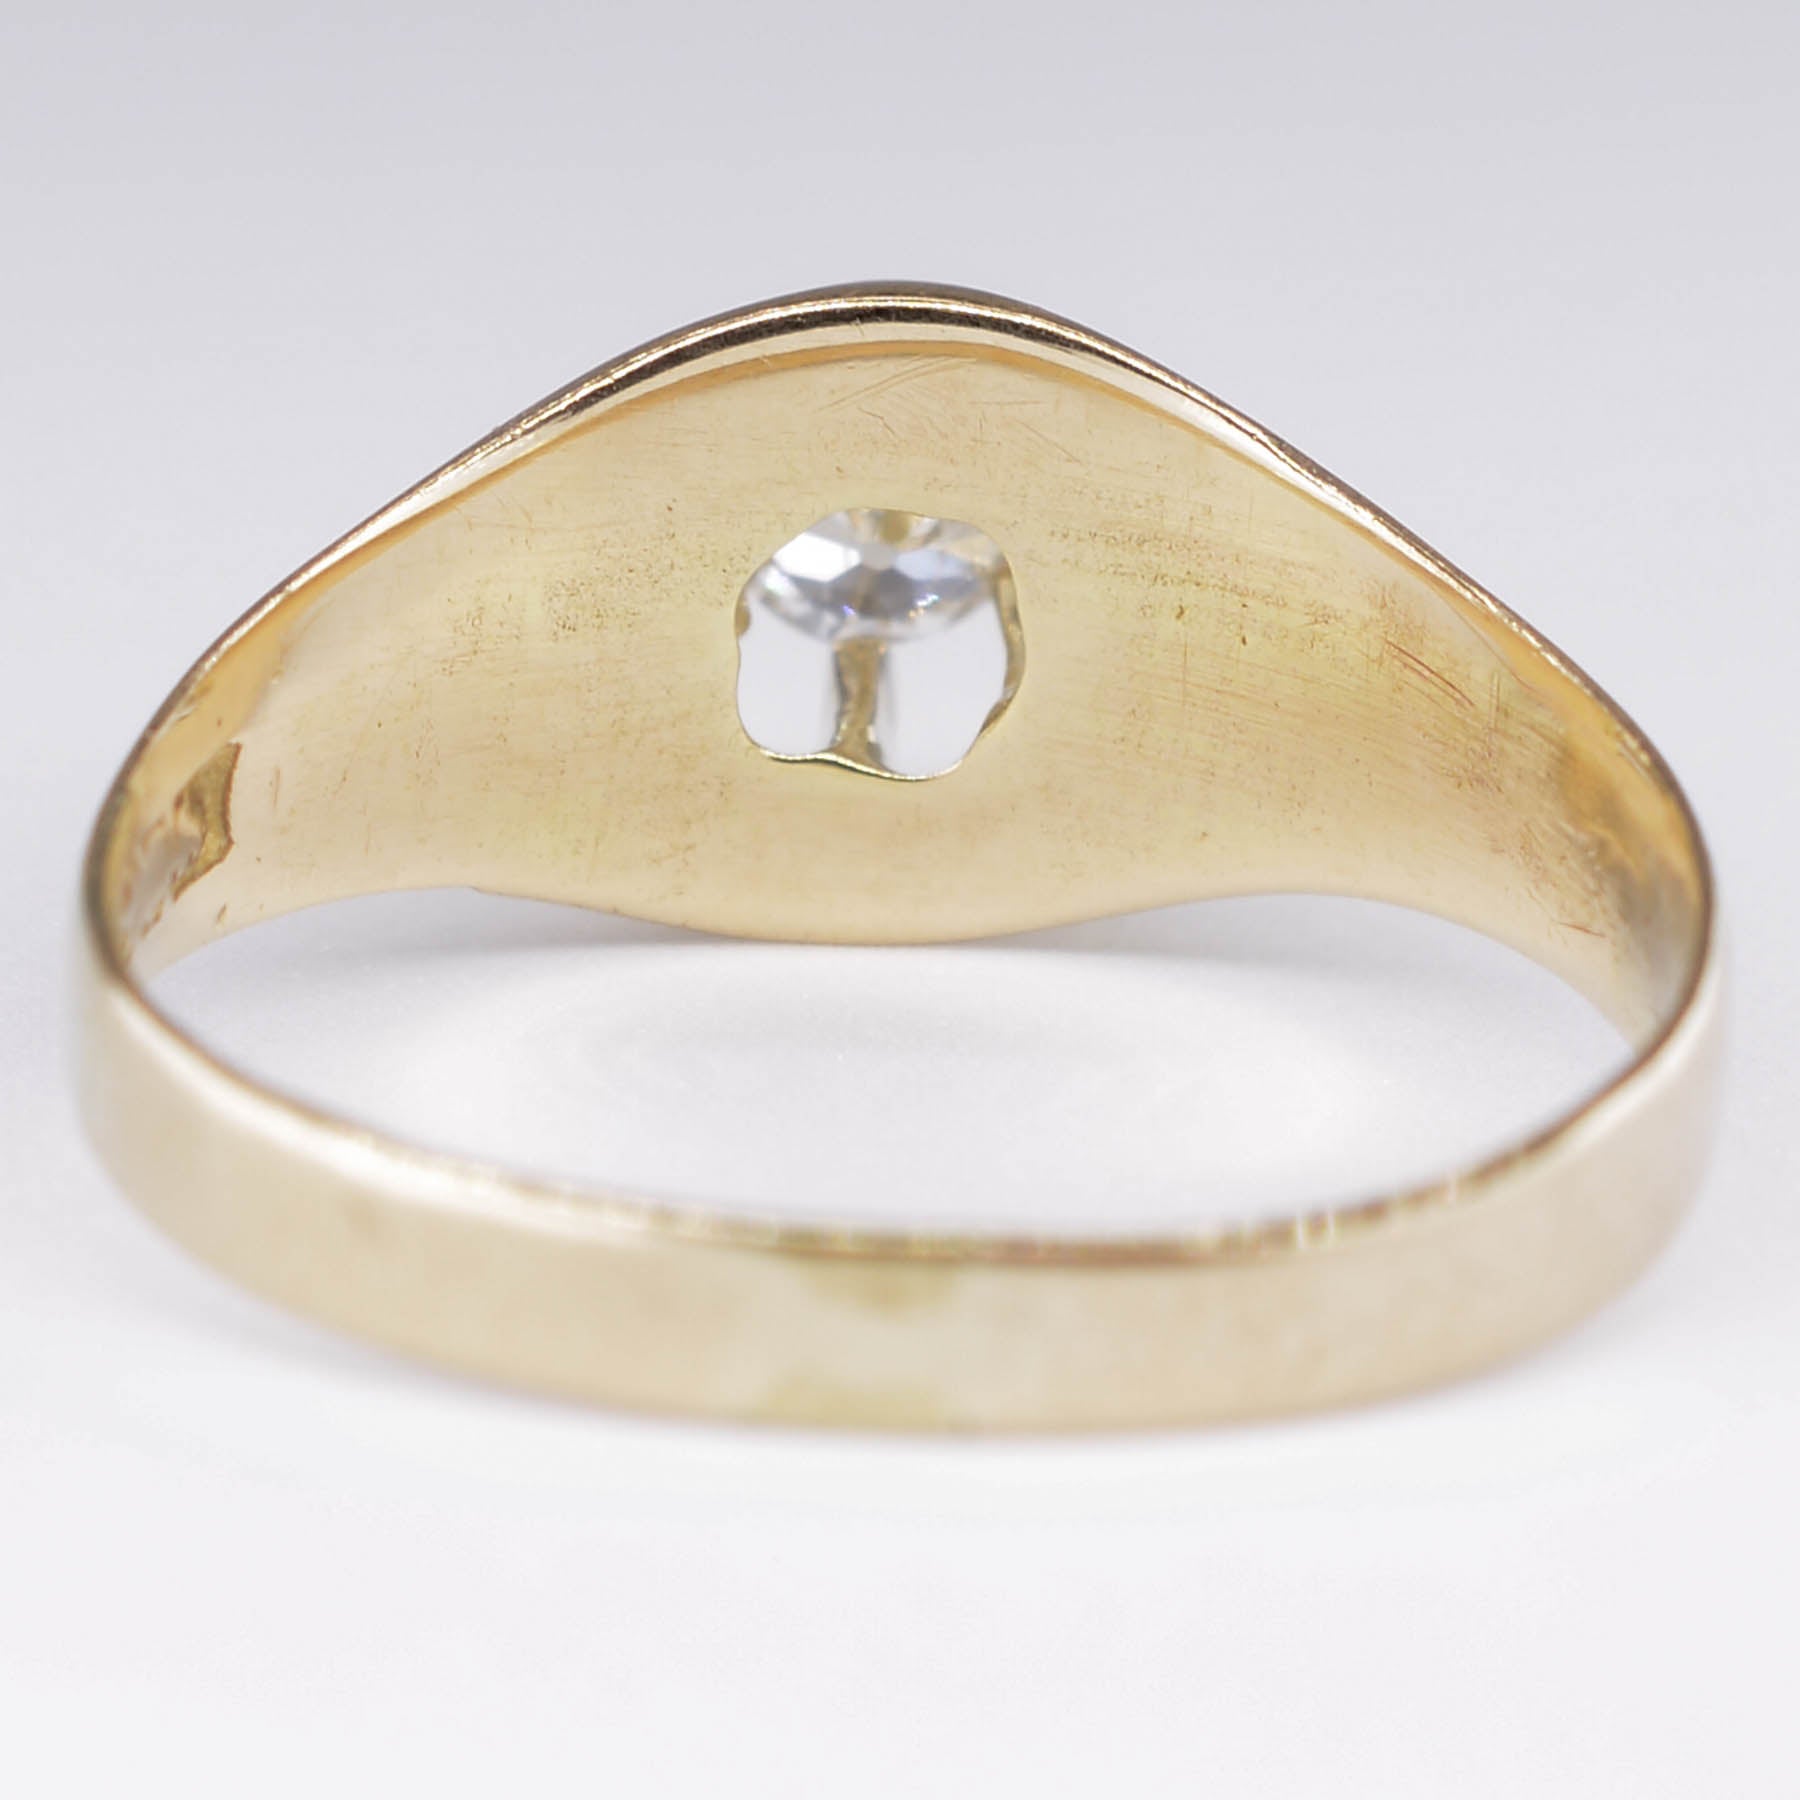 12k Old European Cut Diamond Ring | 0.25ct | SZ 8.5 |